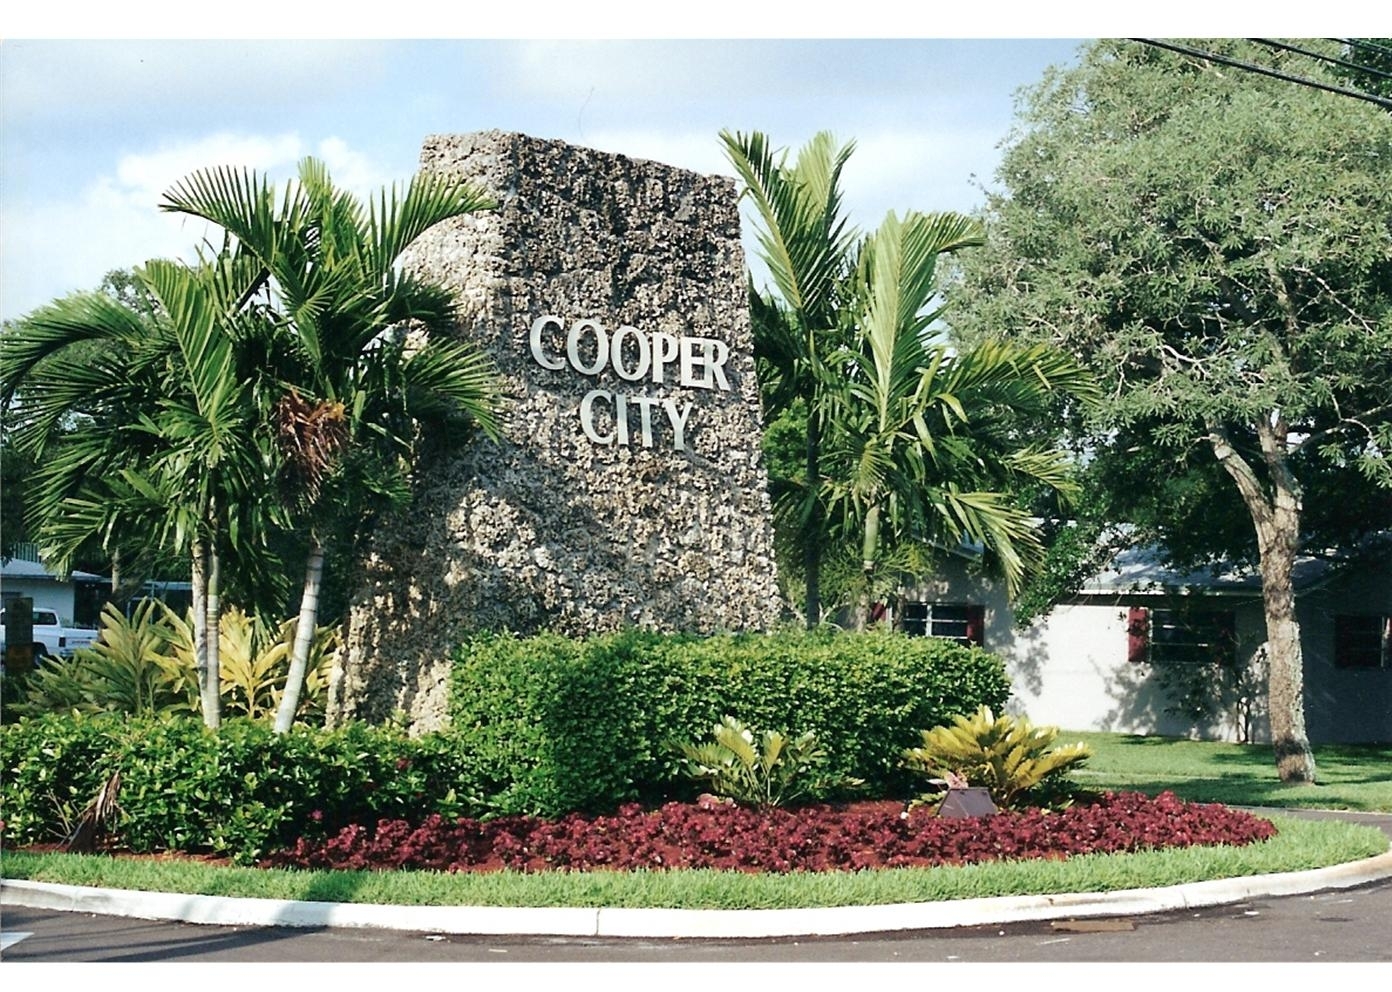 Cooper City, Florida